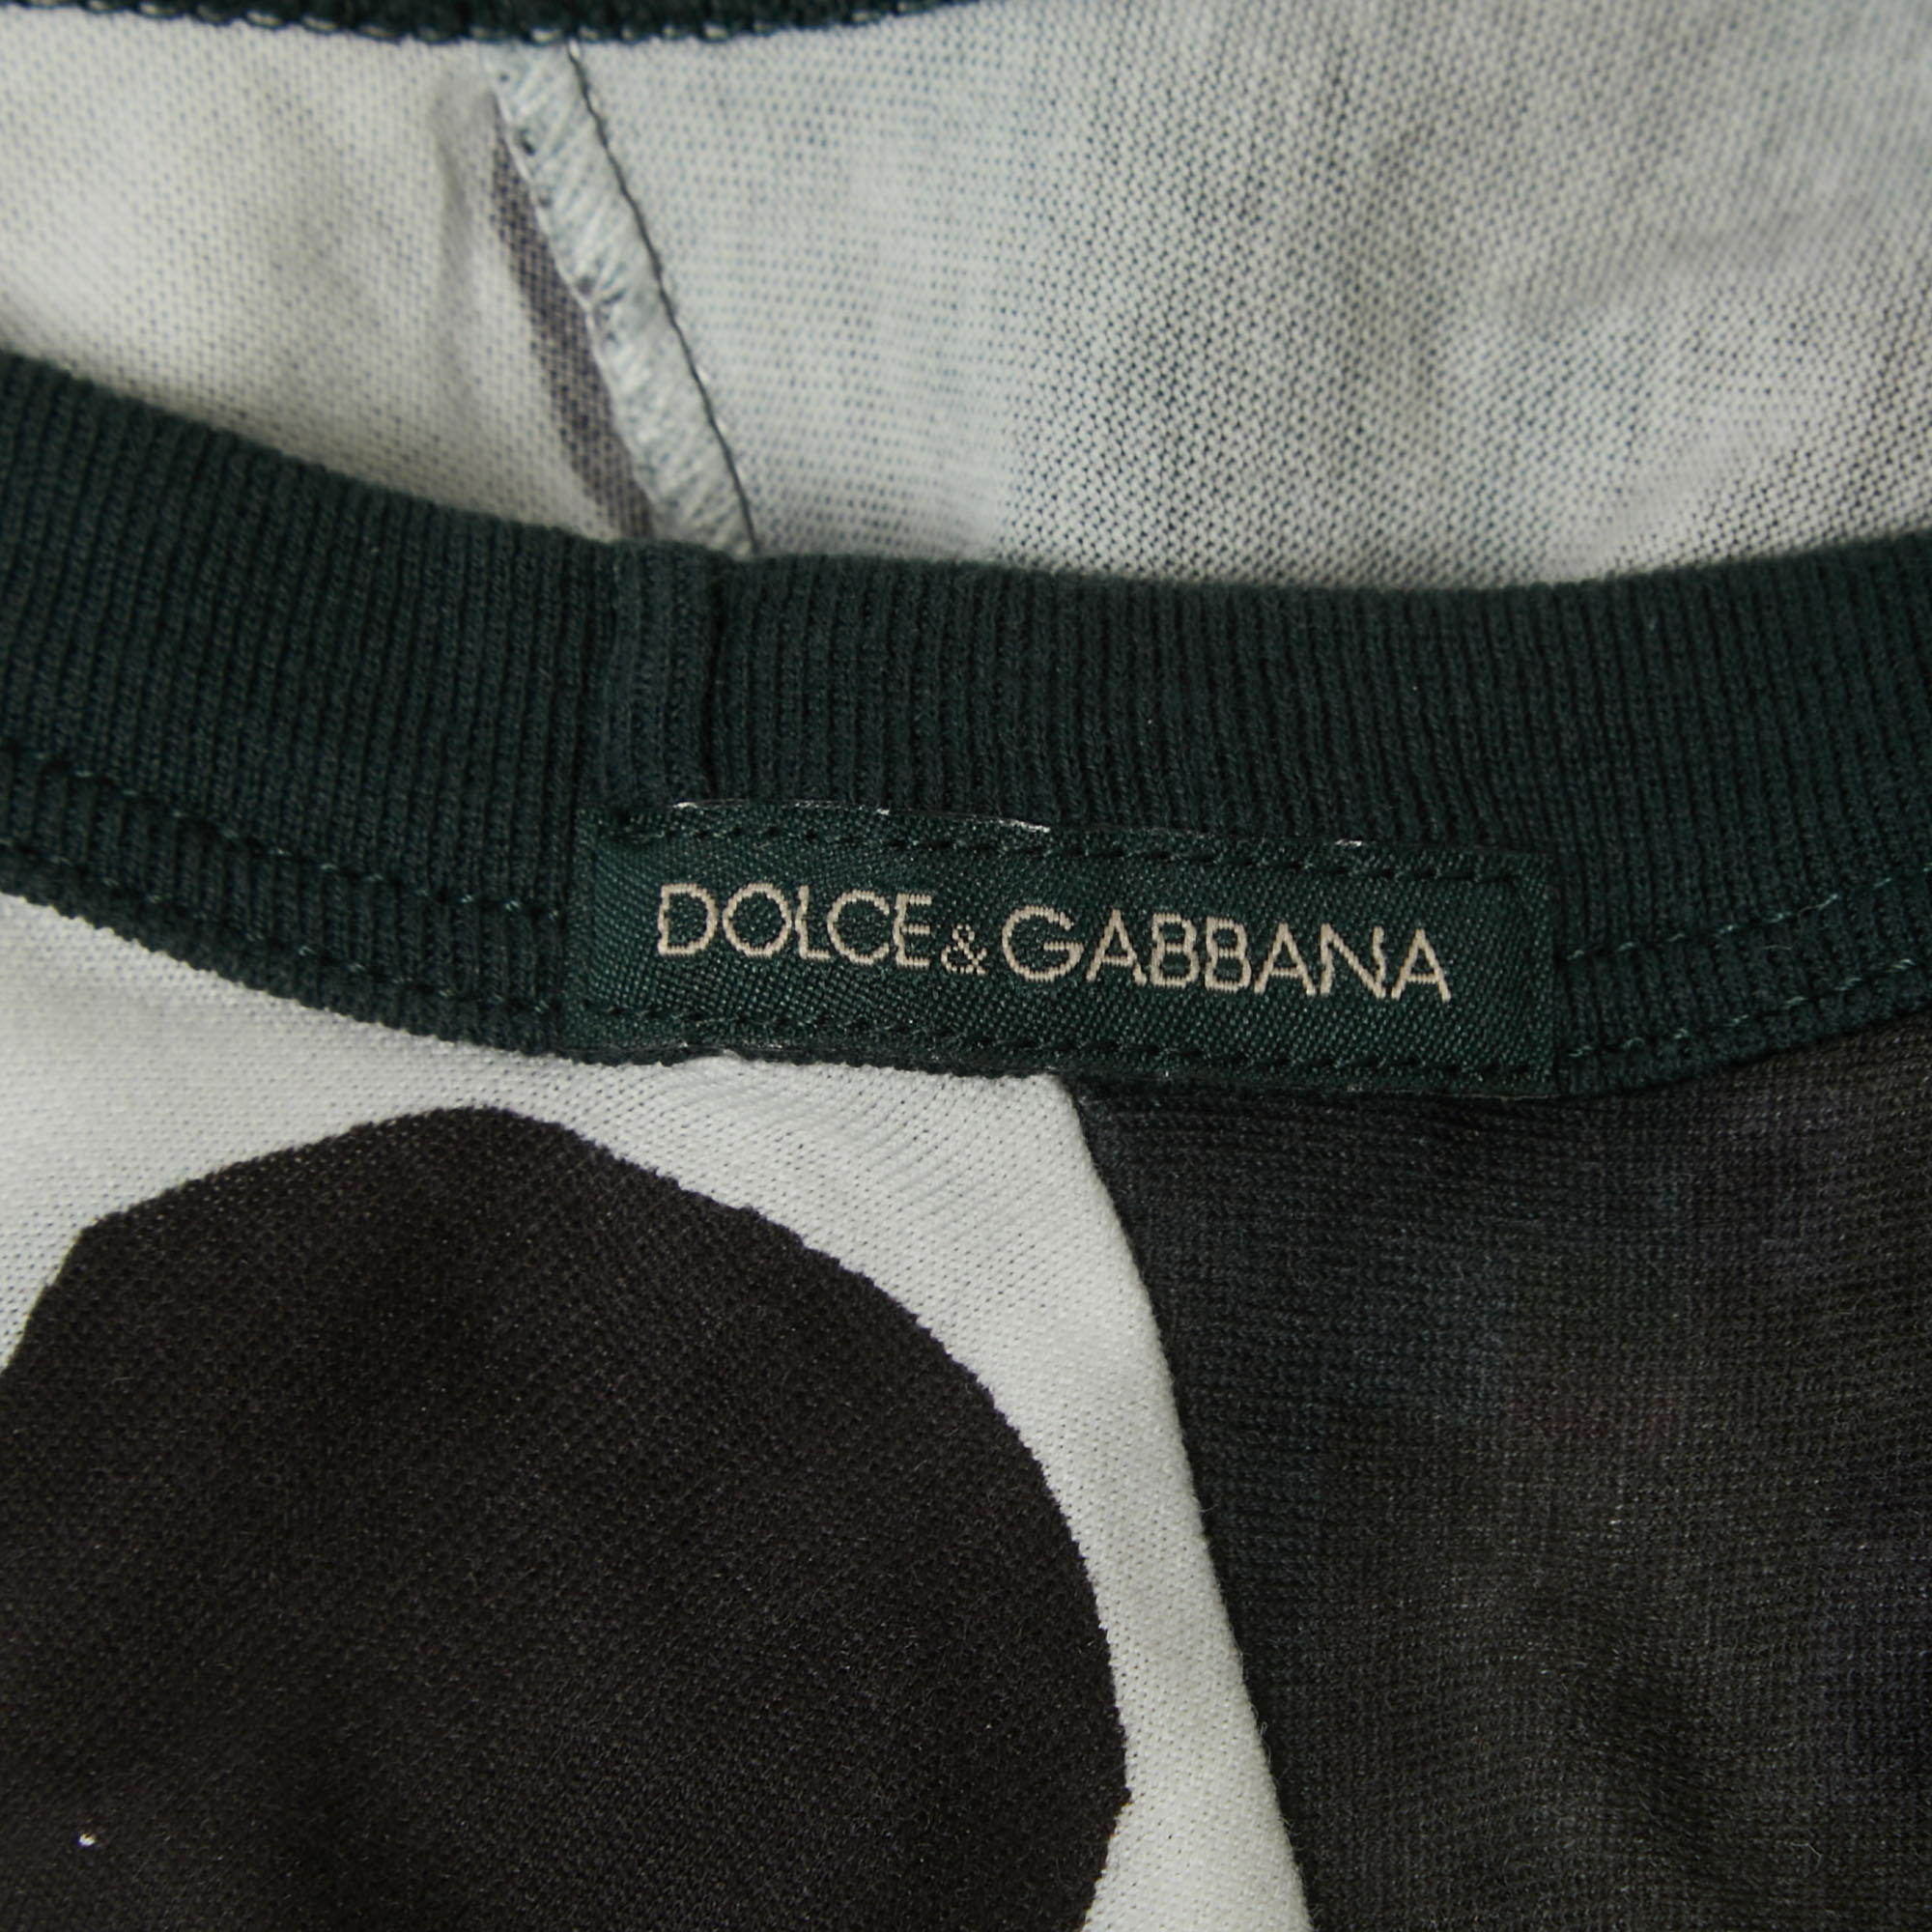 Dolce & Gabbana Multicolor All-Over Print Cotton V-Neck Half Sleeve T-Shirt S